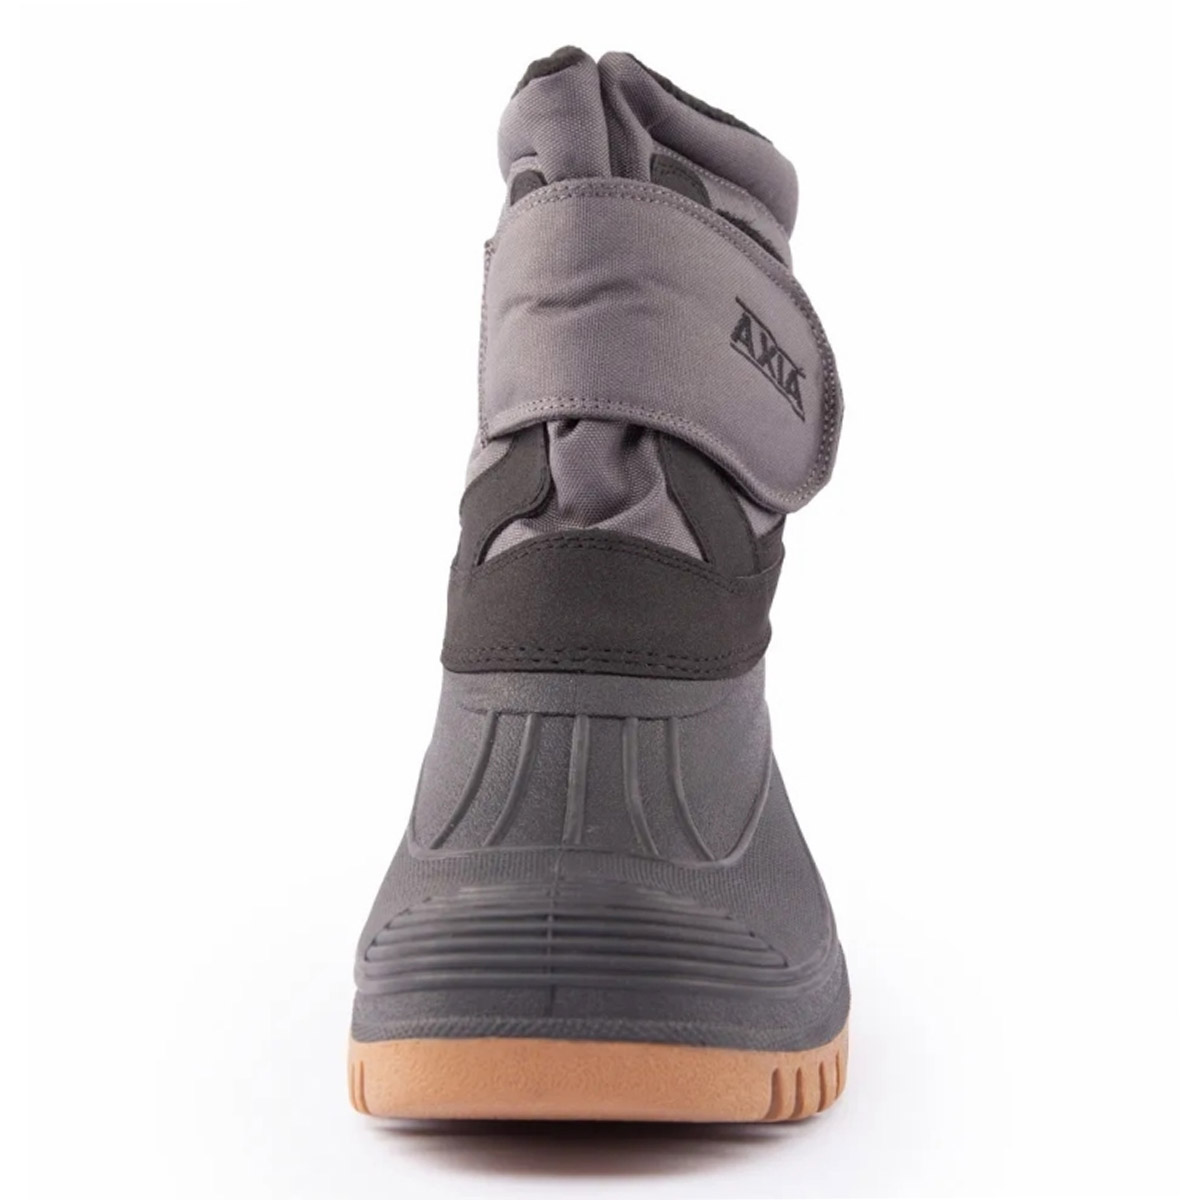 Axia Velcro Boots